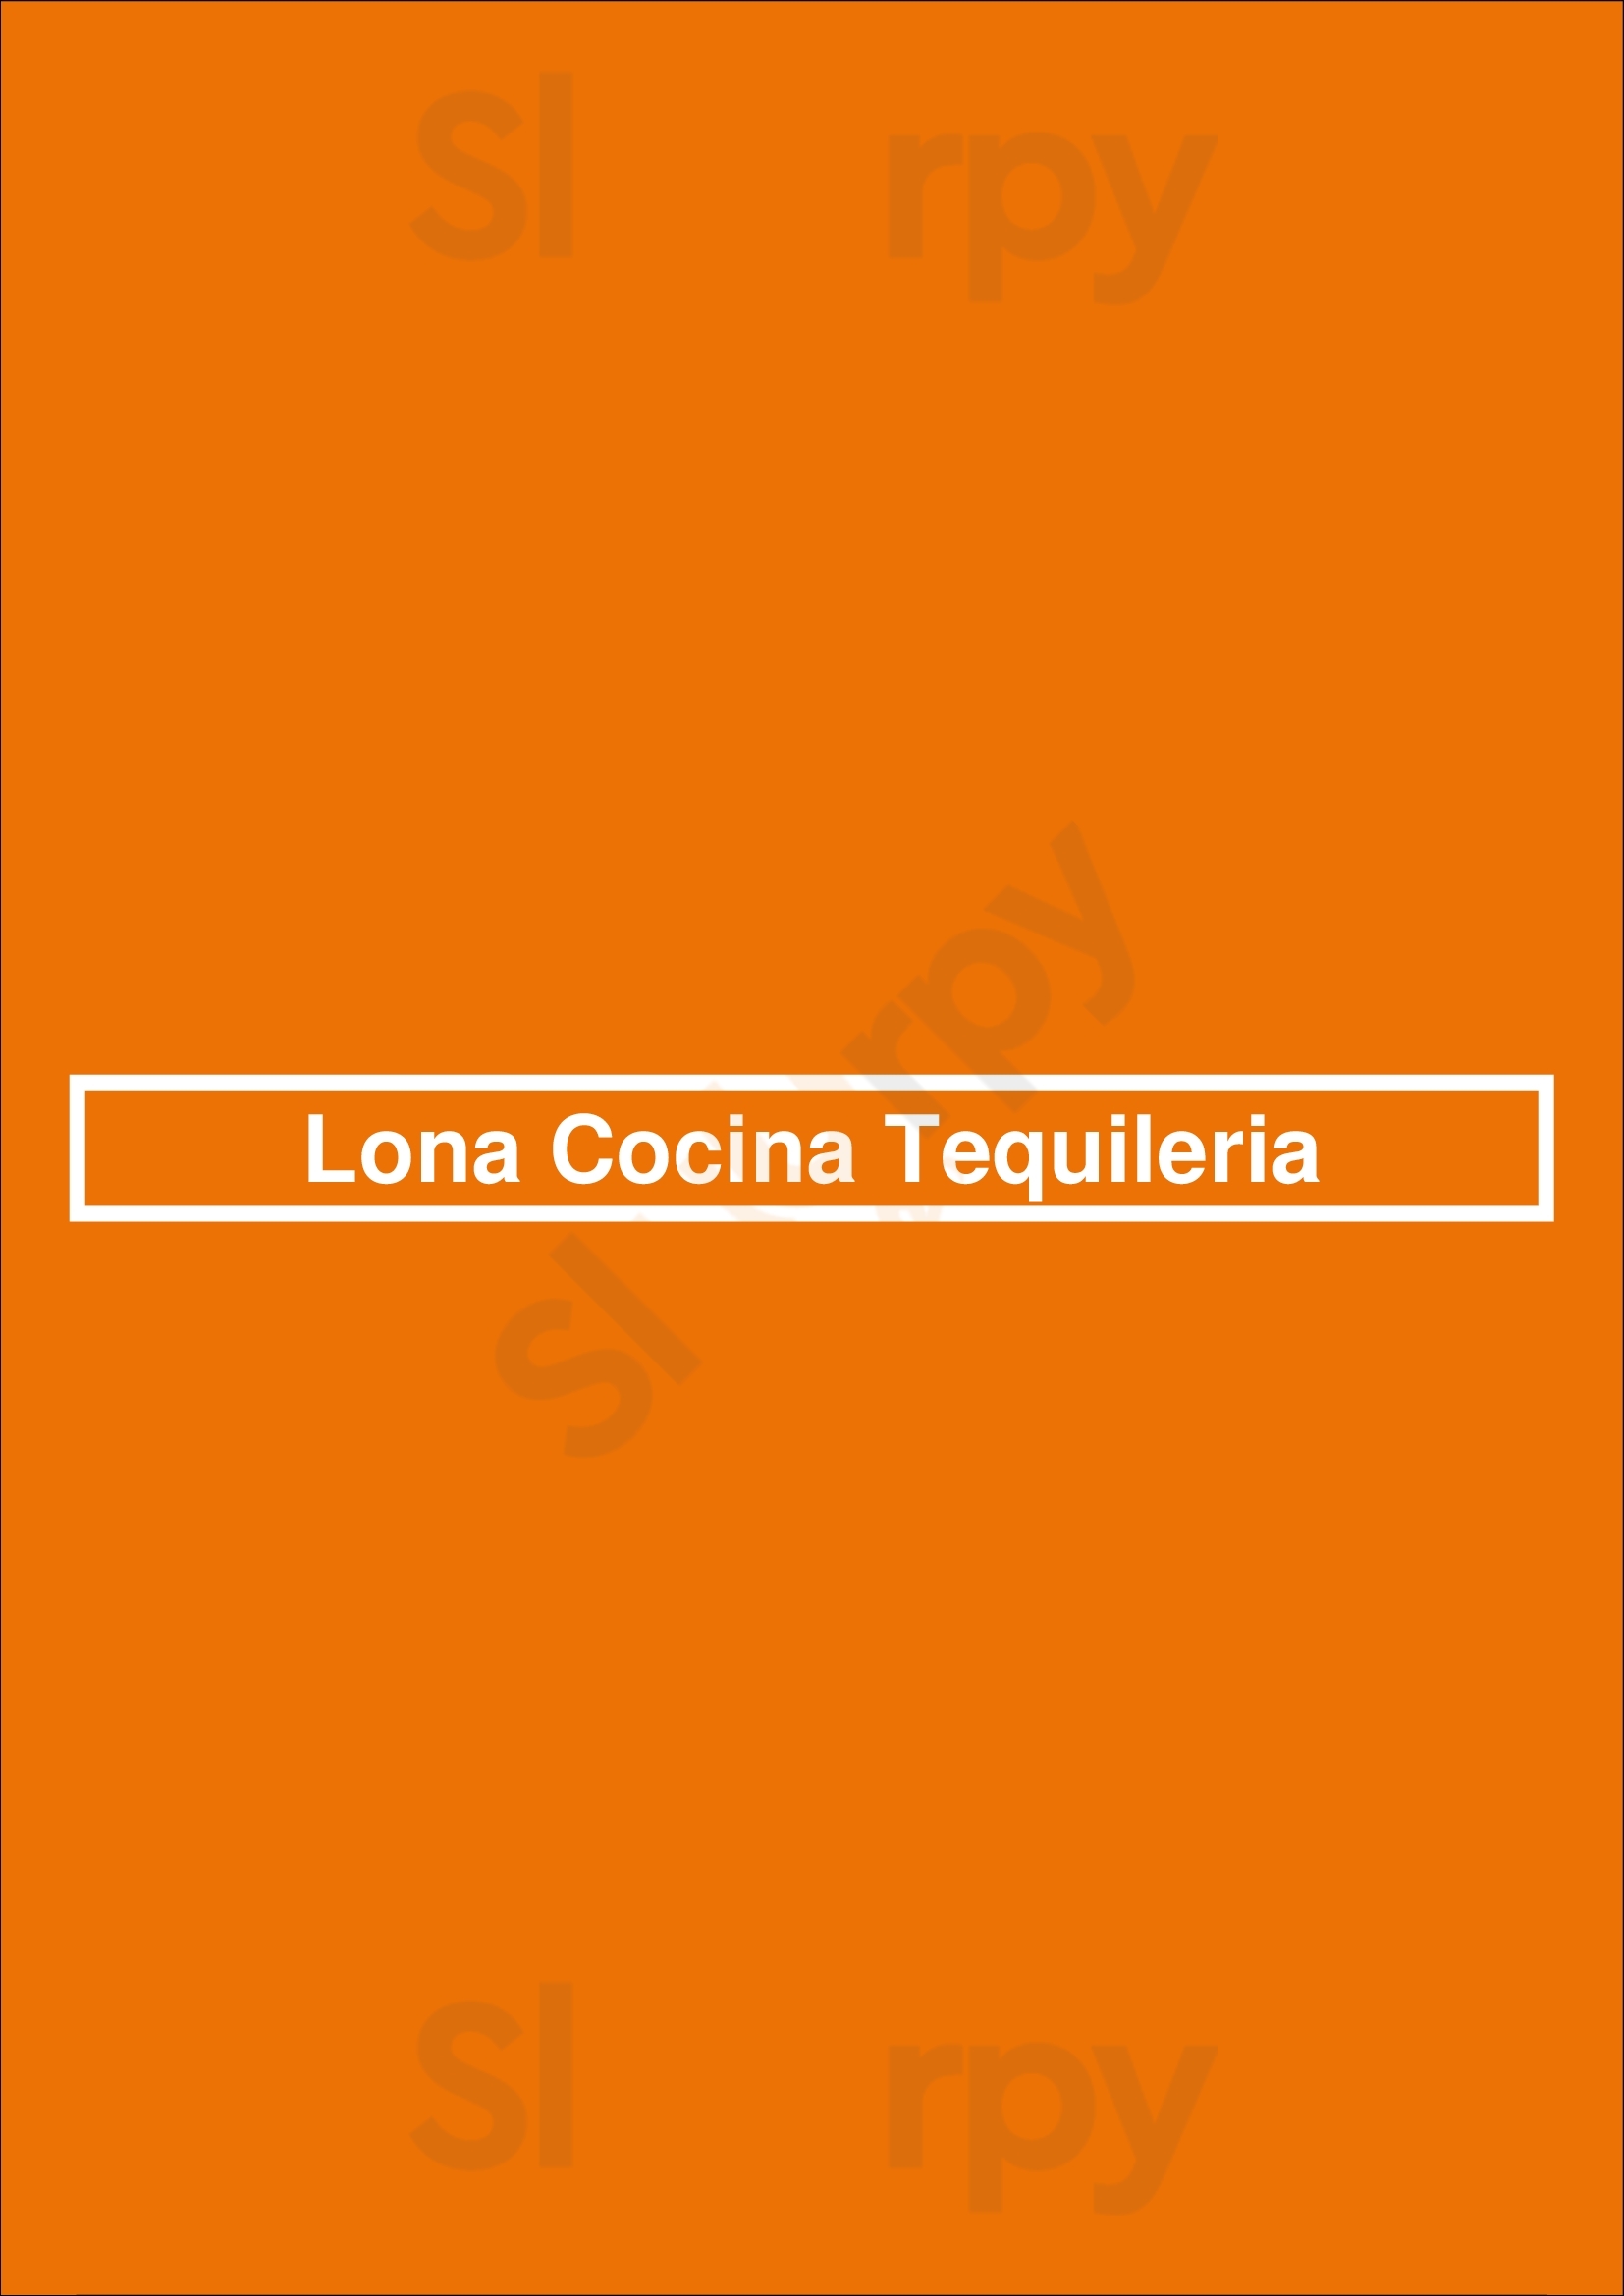 Lona Cocina Tequileria Fort Lauderdale Menu - 1